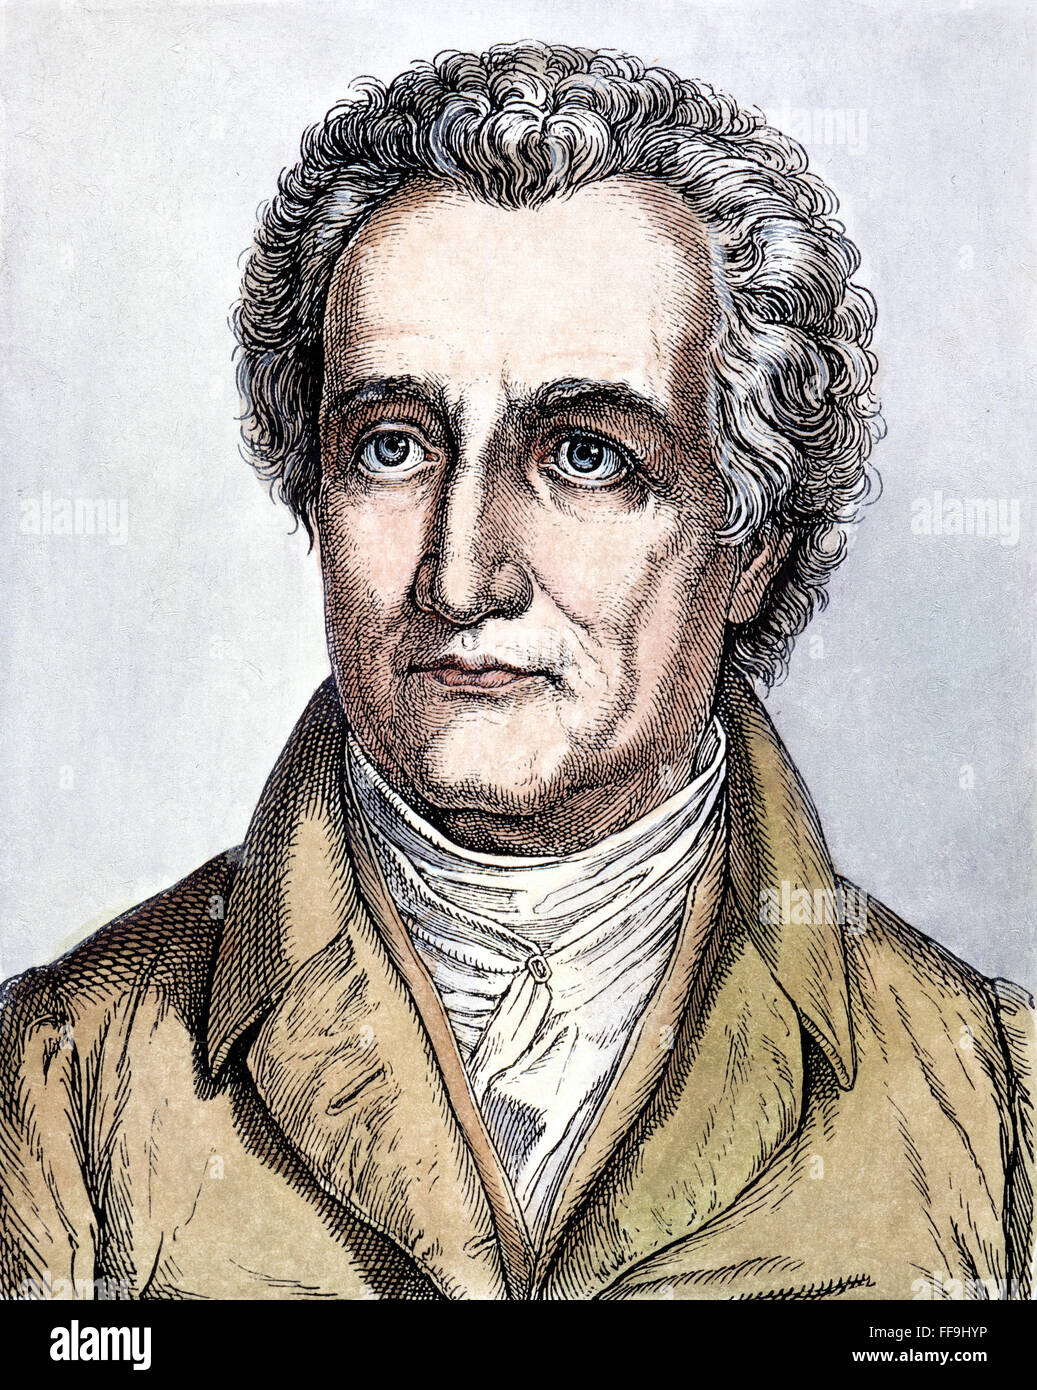 JOHANN GOETHE (1749-1832). /nJohann Wolfgang von Goethe. German poet and man of letters. Wood engraving, 19th century. Stock Photo